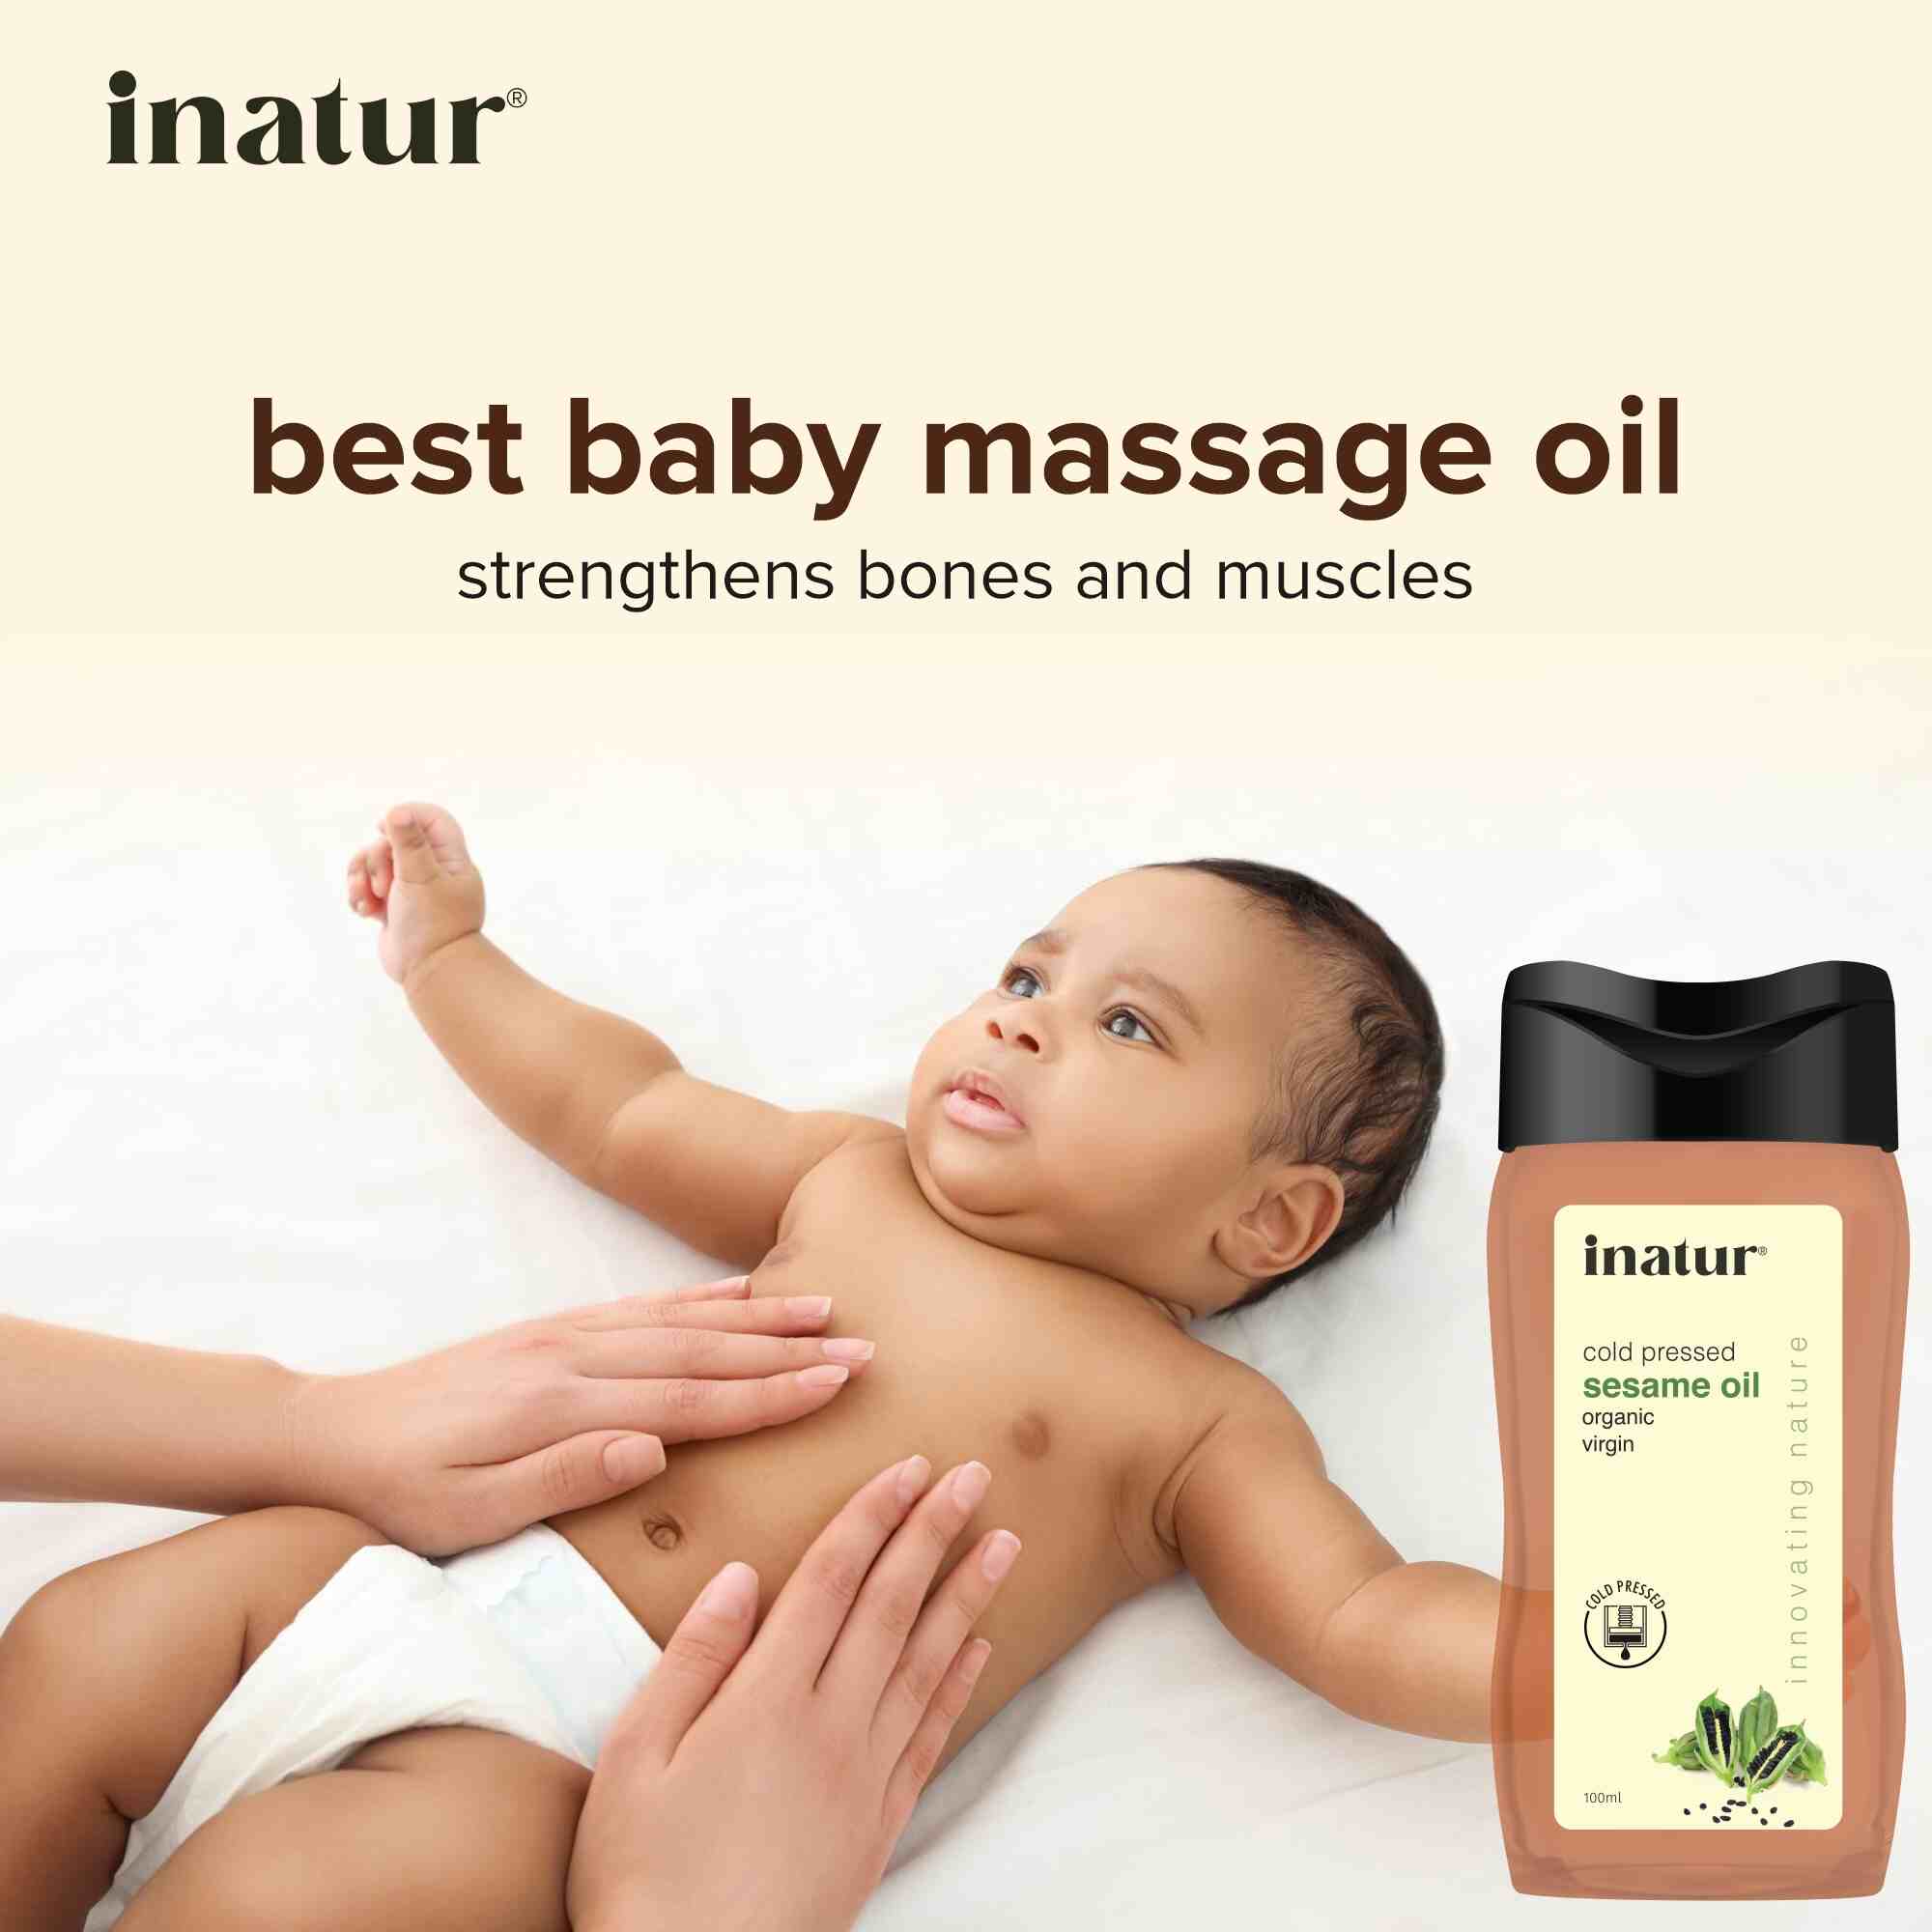 inatur baby massage oil